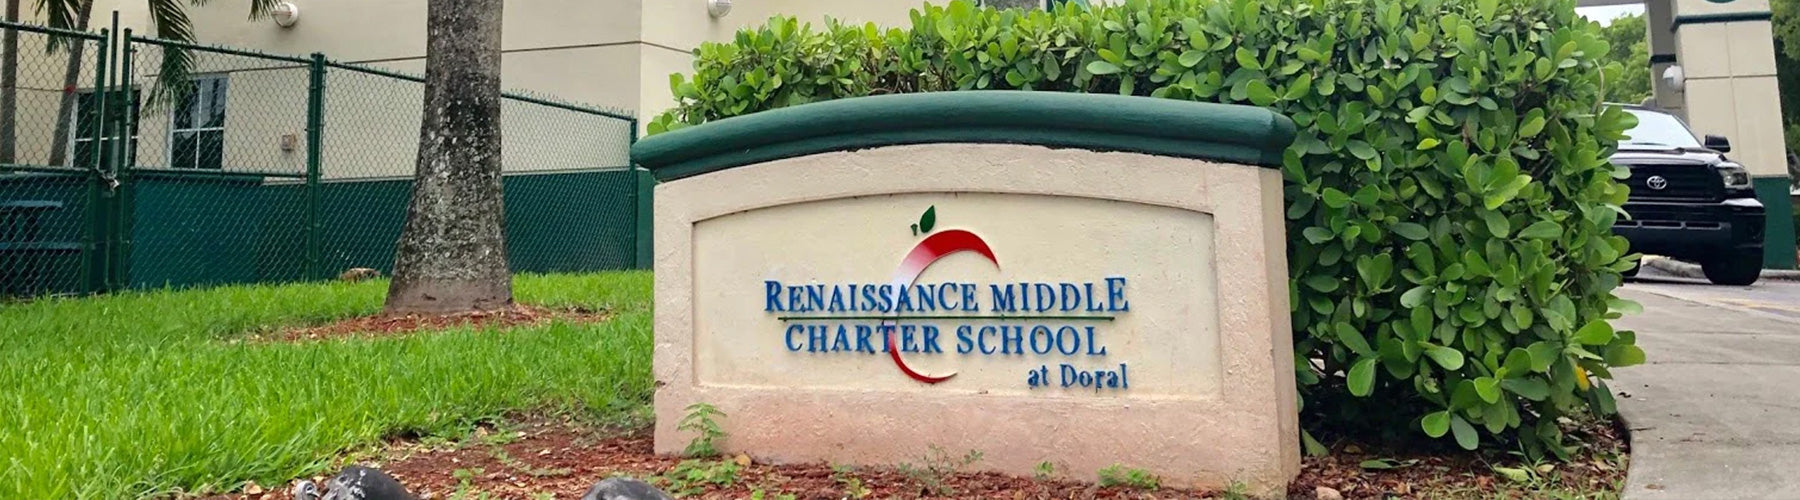 Renaissance Charter Middle School At Doral (6-8)